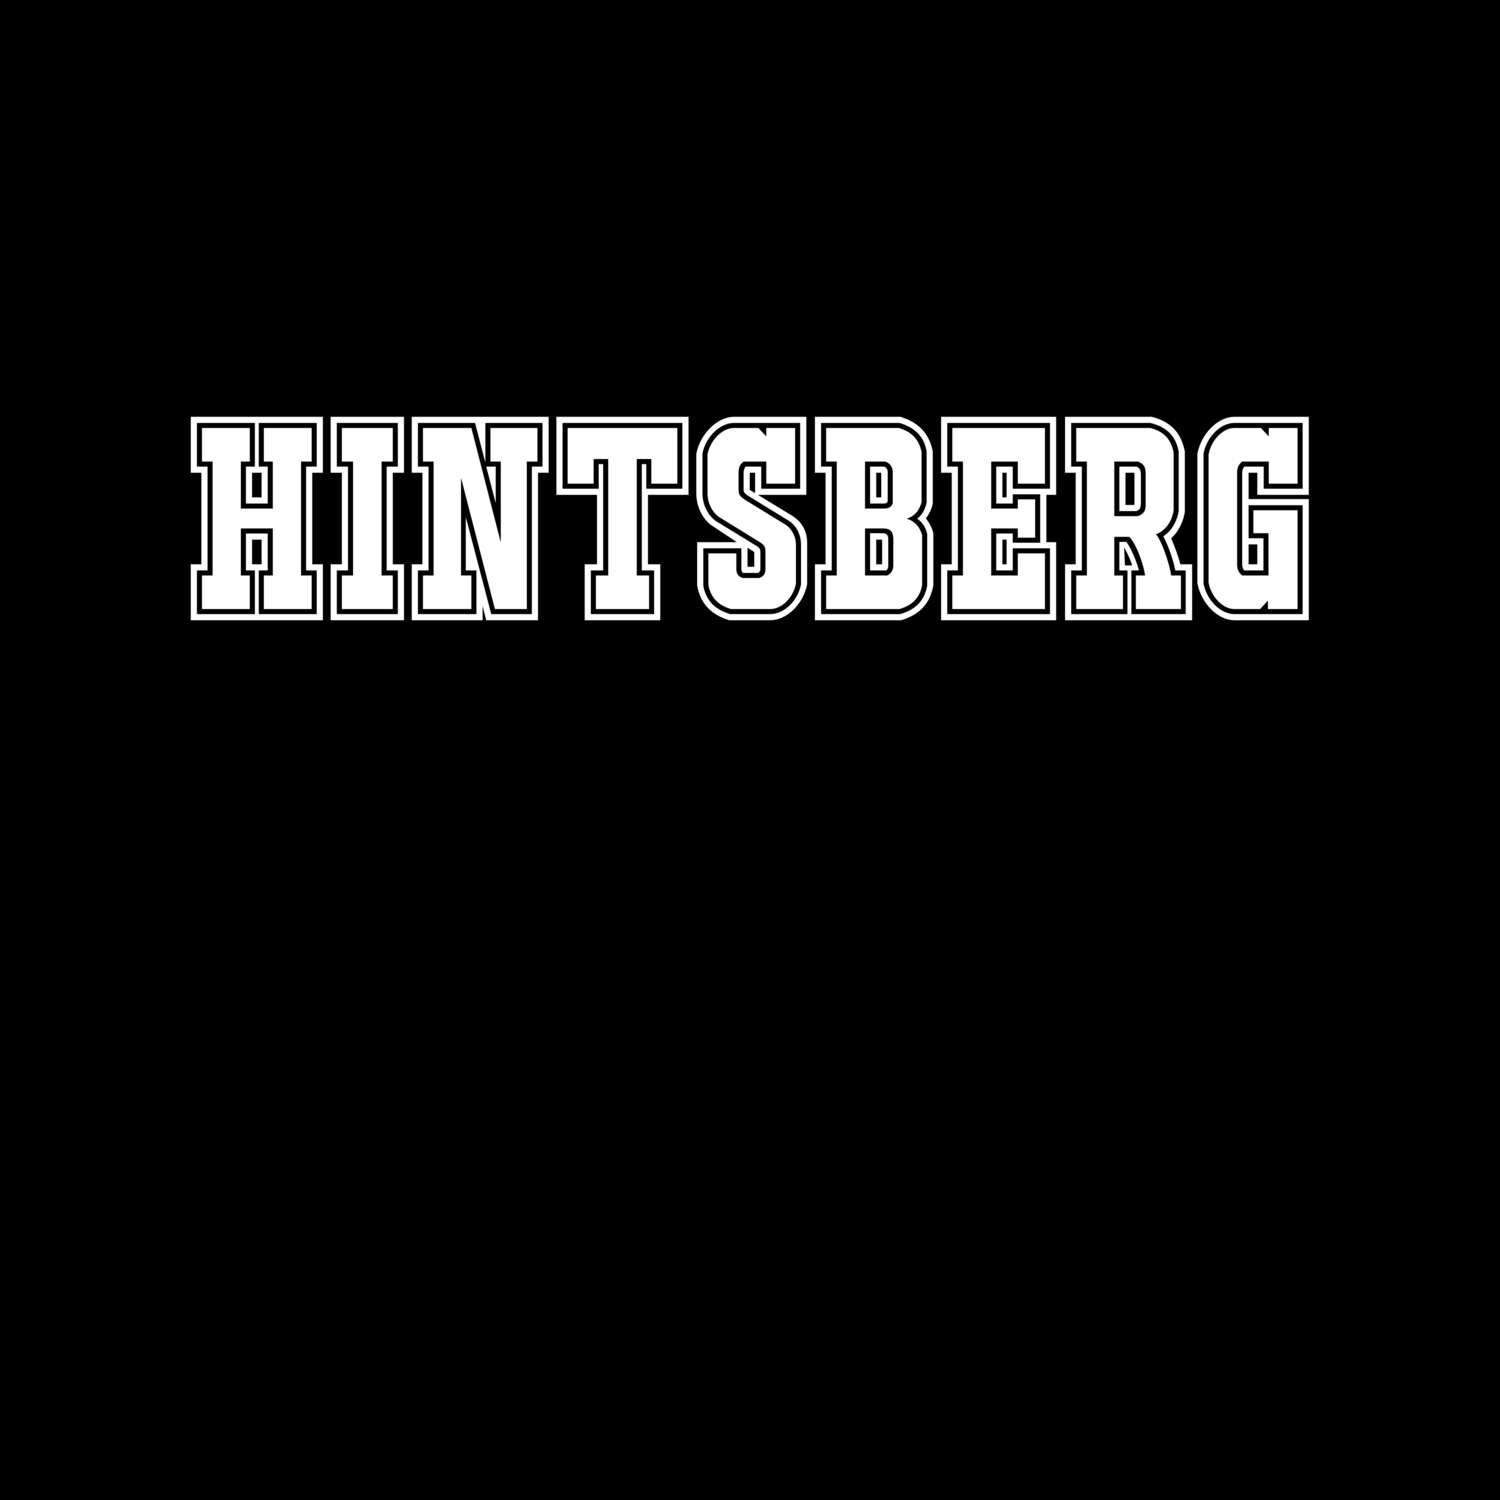 Hintsberg T-Shirt »Classic«